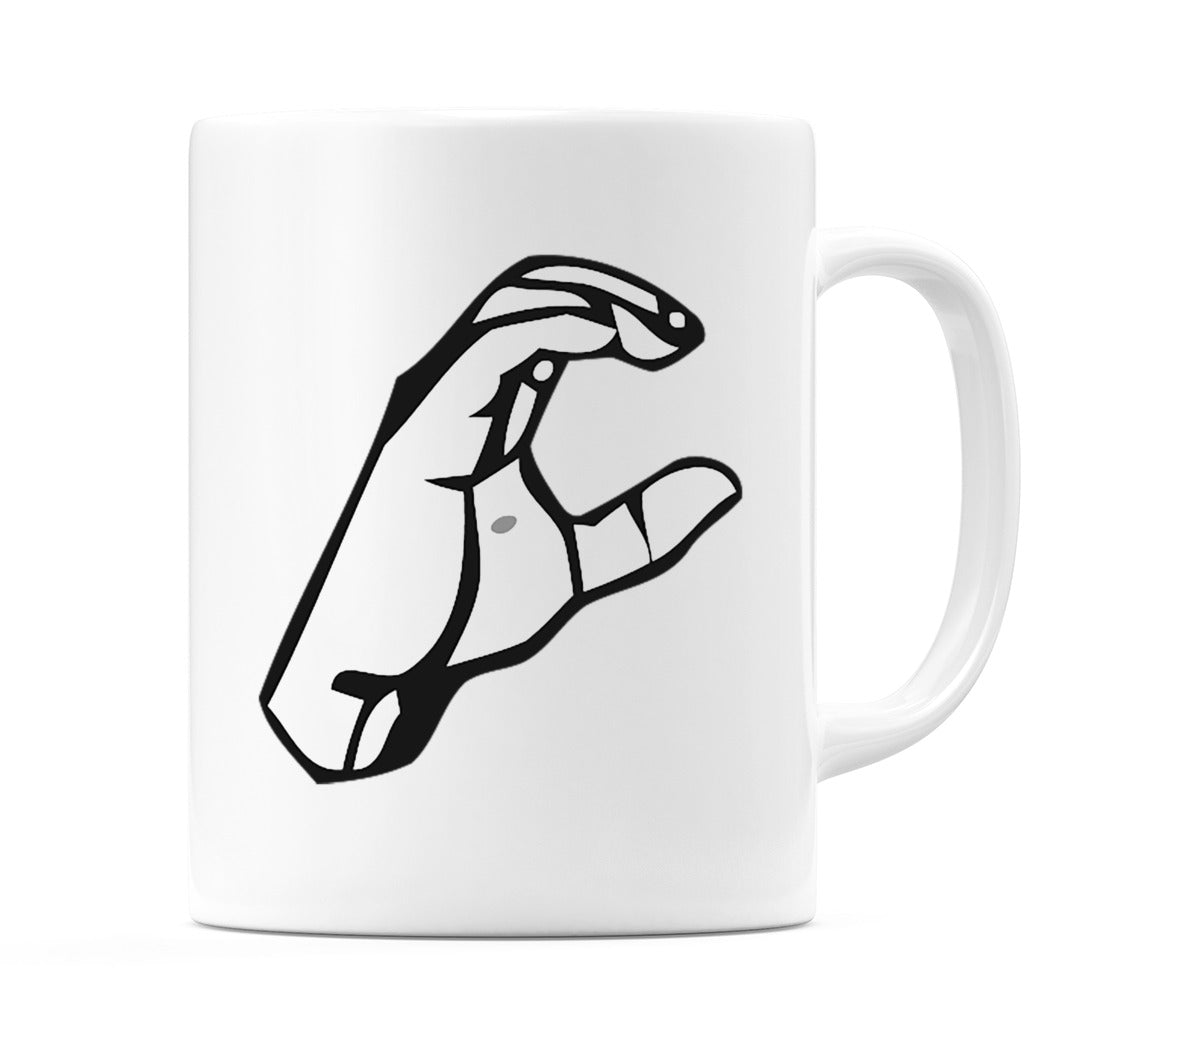 US Sign Language Letter C Mug